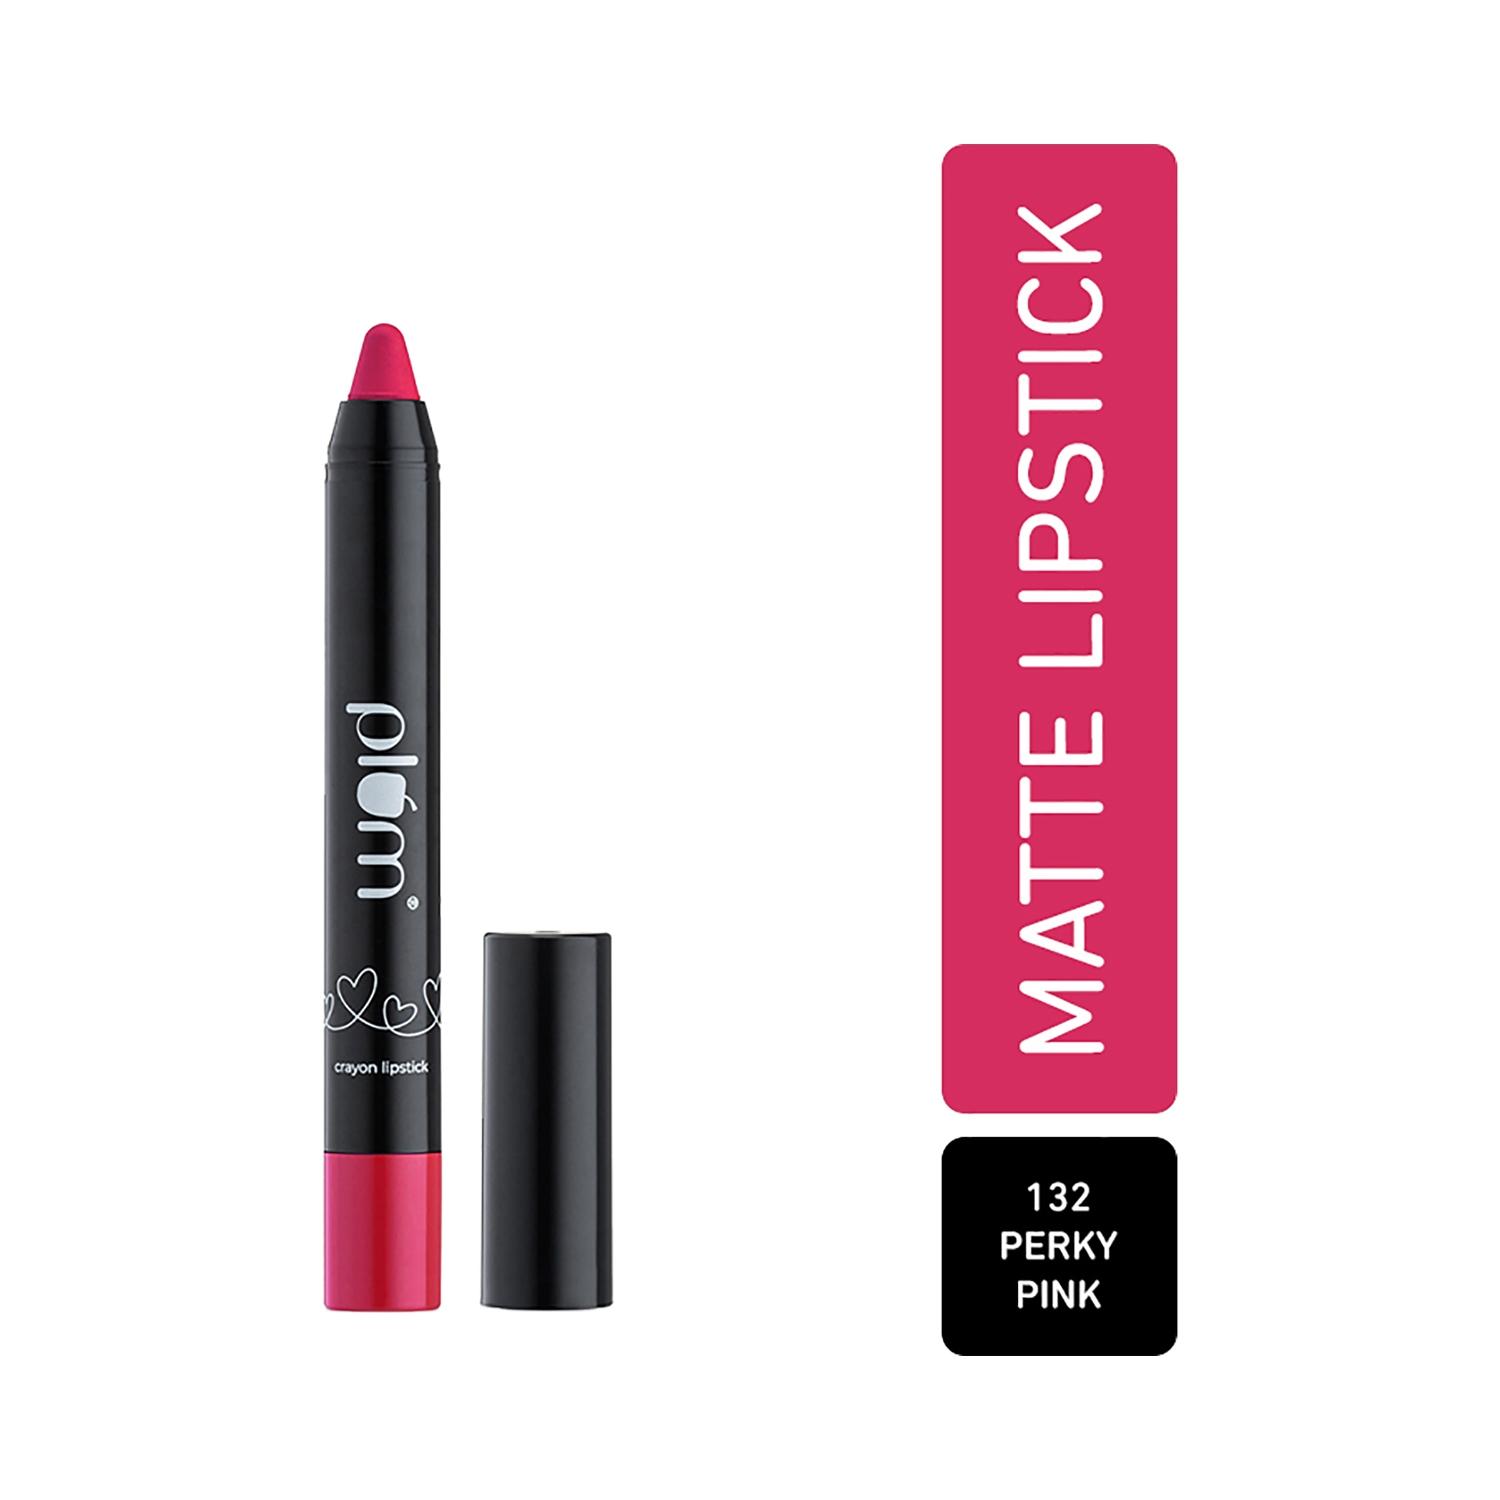 plum twist & go matte crayon lipstick with ceramides & hyaluronic acid - 132 perky pink (1.8g)